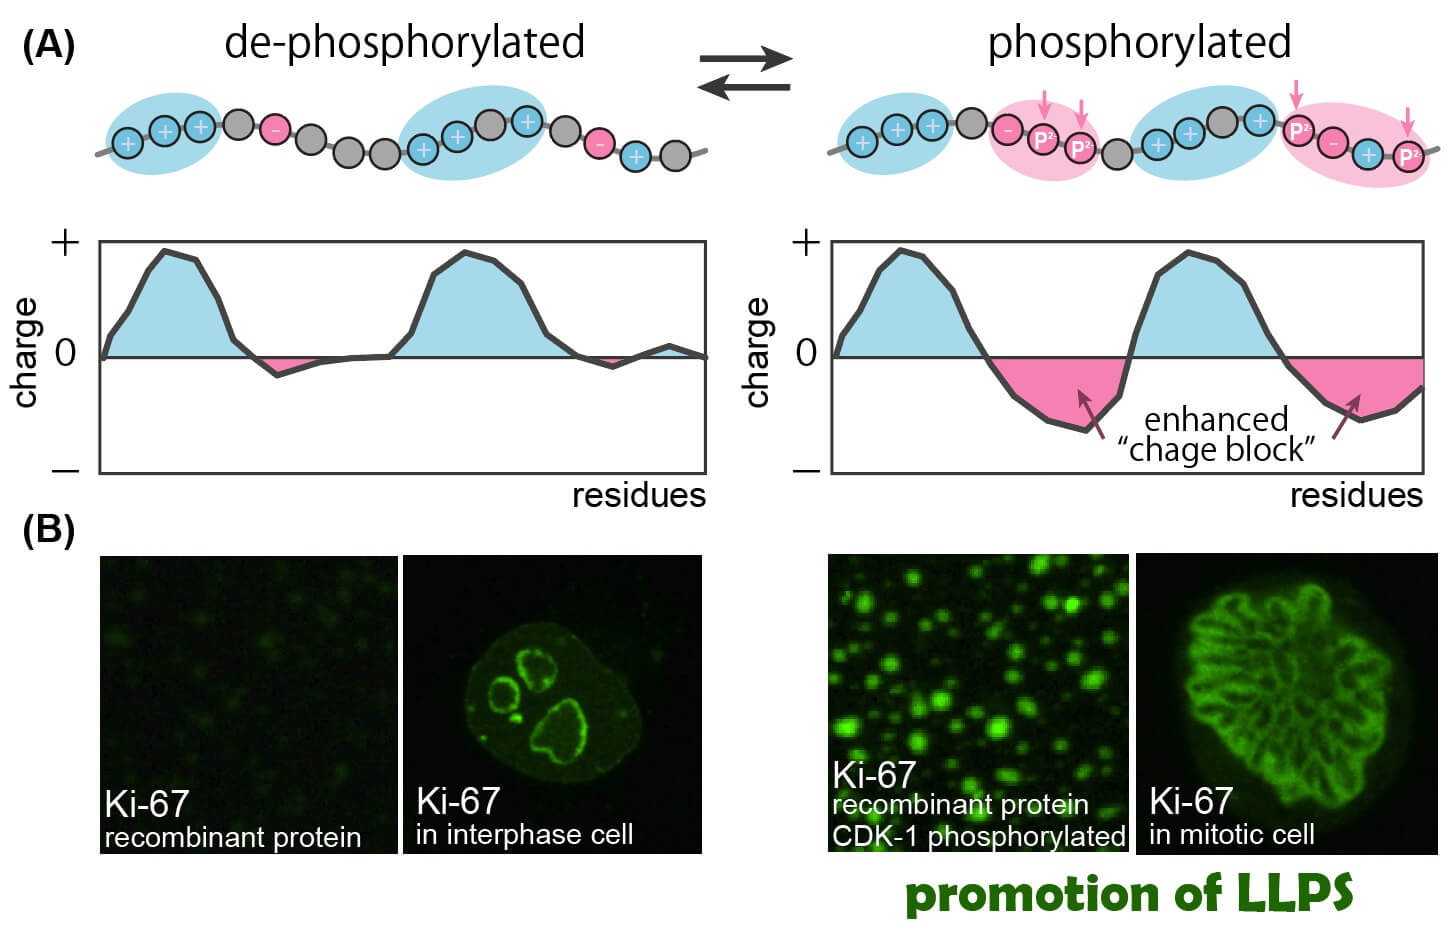 How does protein phosphorylation regulate liquid-liquid phase separation?